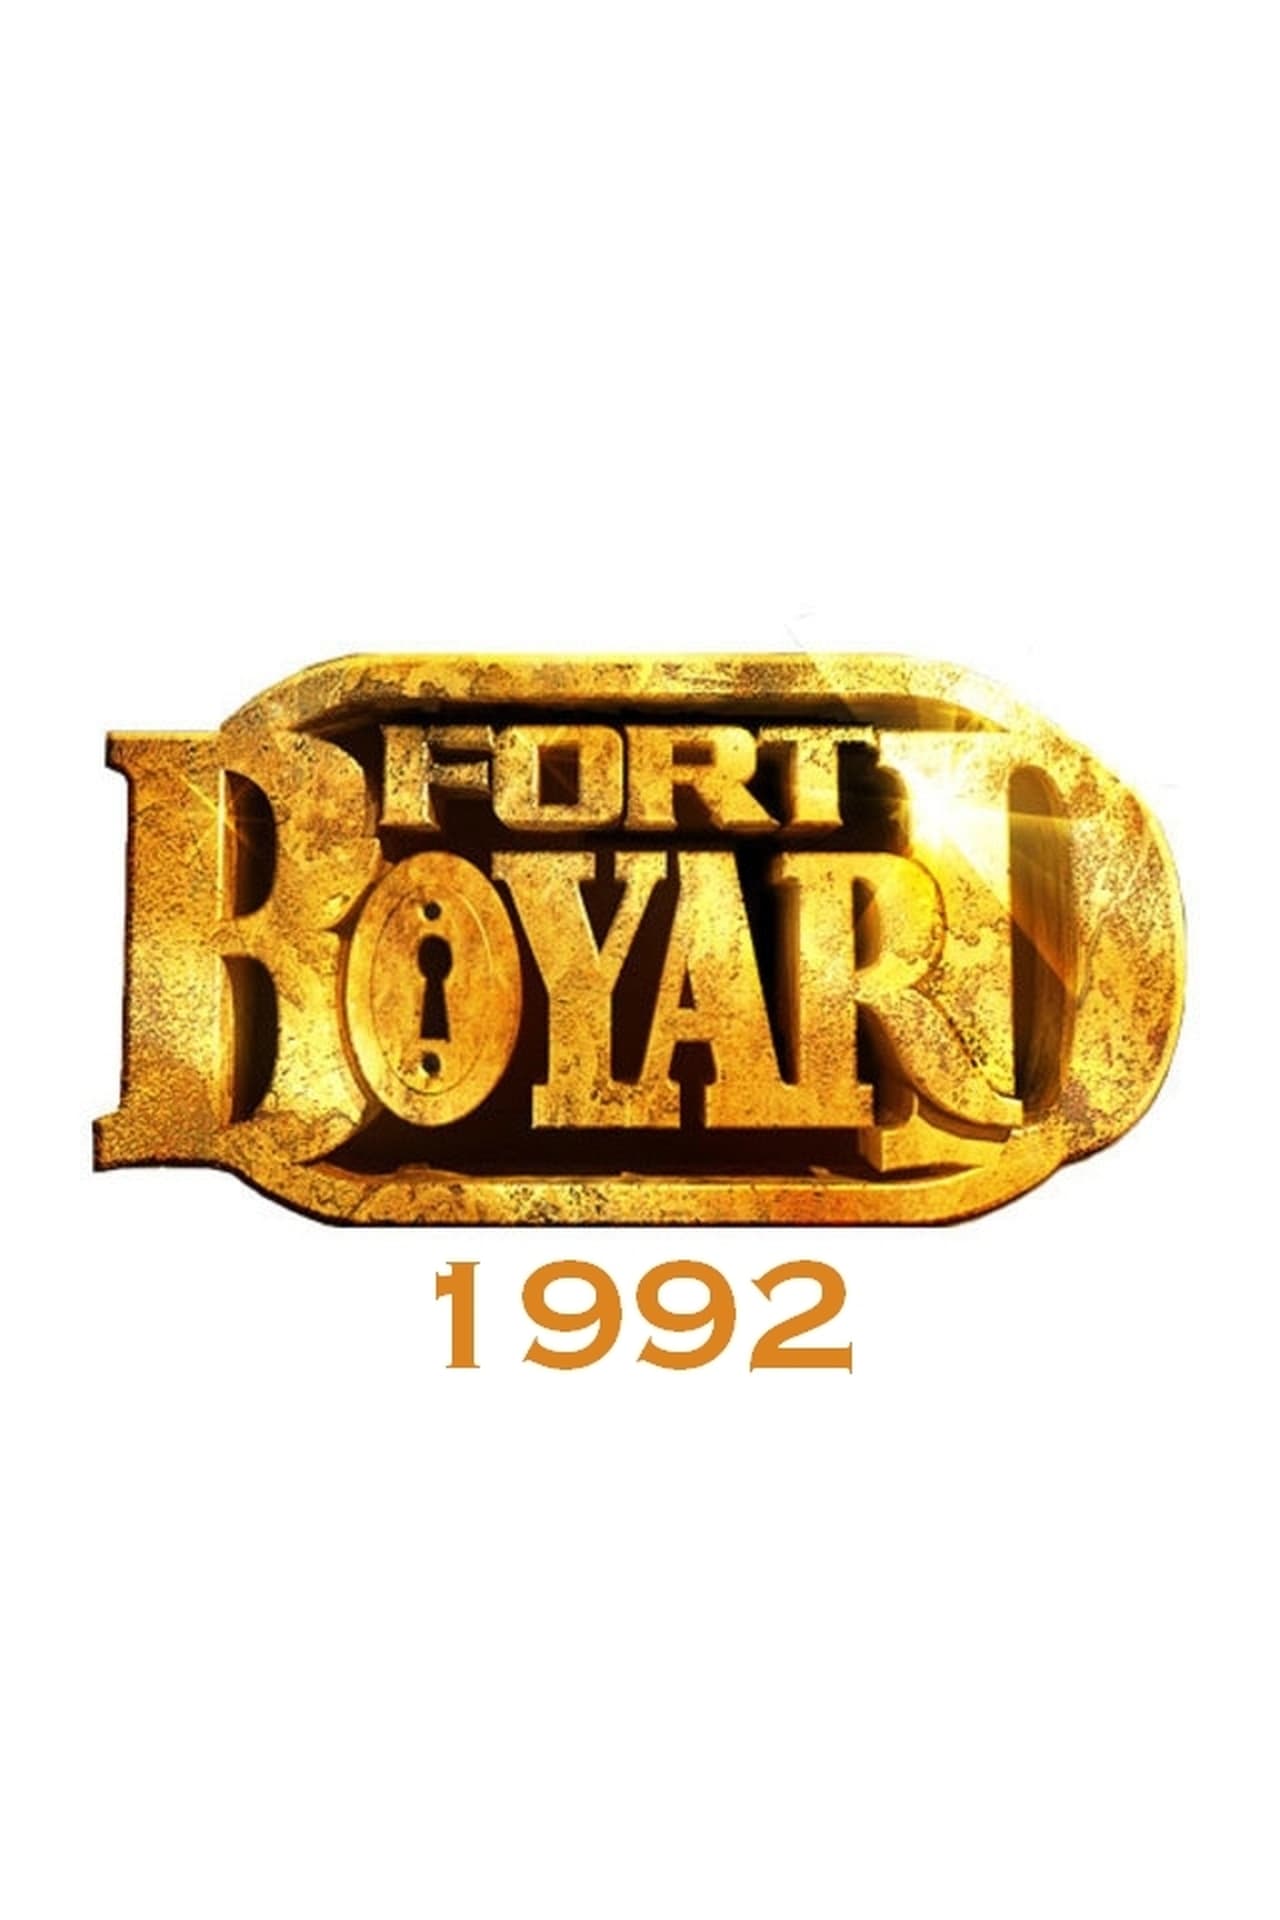 Fort Boyard (1992)